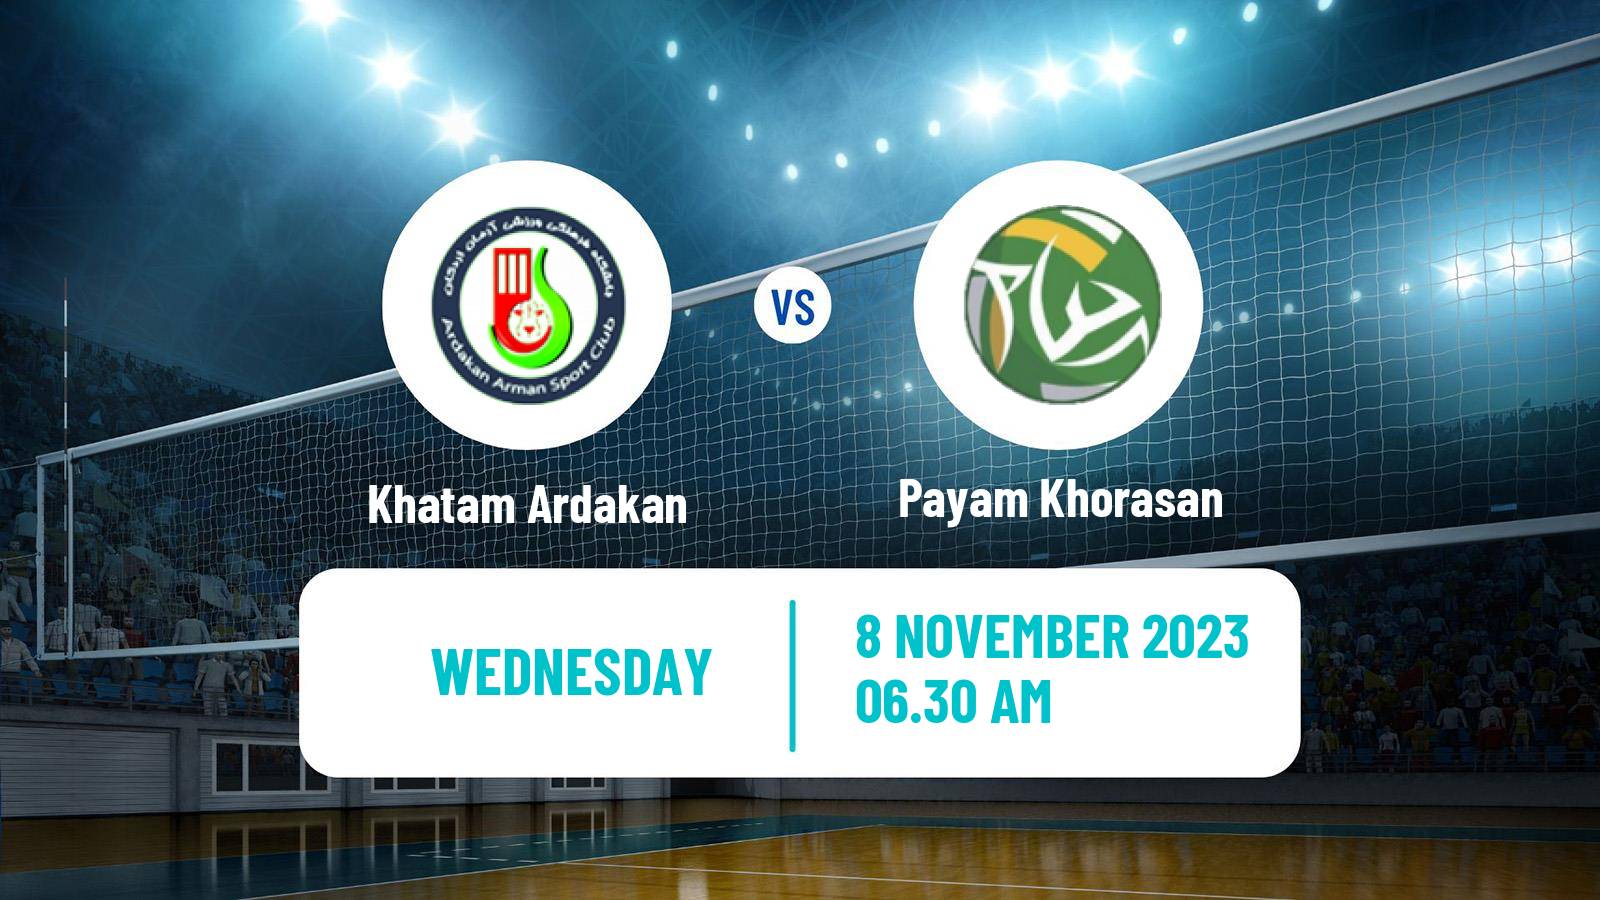 Volleyball Iran Super League Volleyball Khatam Ardakan - Payam Khorasan